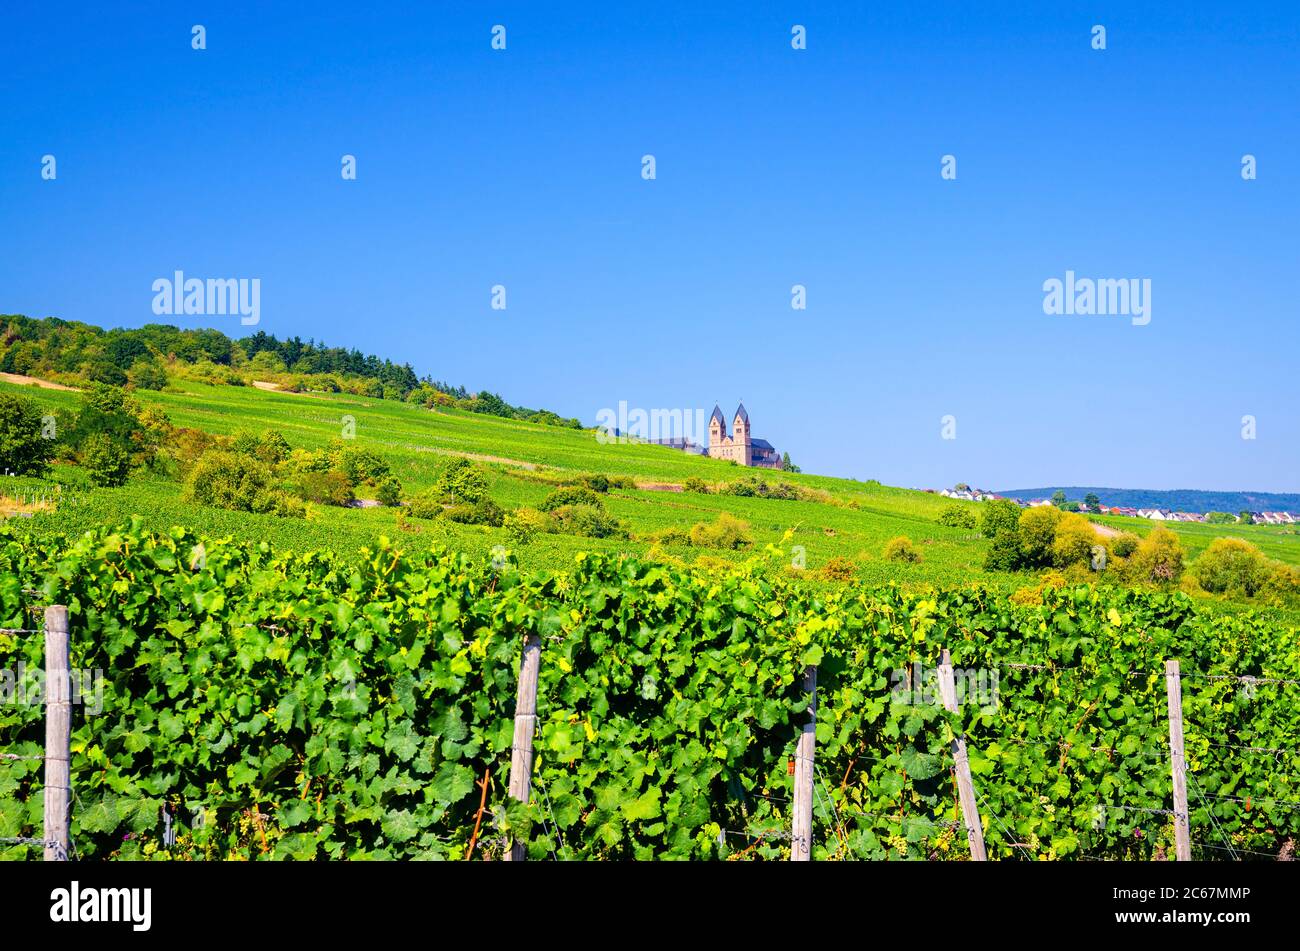 Vineyards green fields landscape with grapevine rows and Eibingen Benedictine Abbey of St. Hildegard on hills, river Rhine Valley, Rheingau wine region near Rudesheim town, State of Hesse, Germany Stock Photo